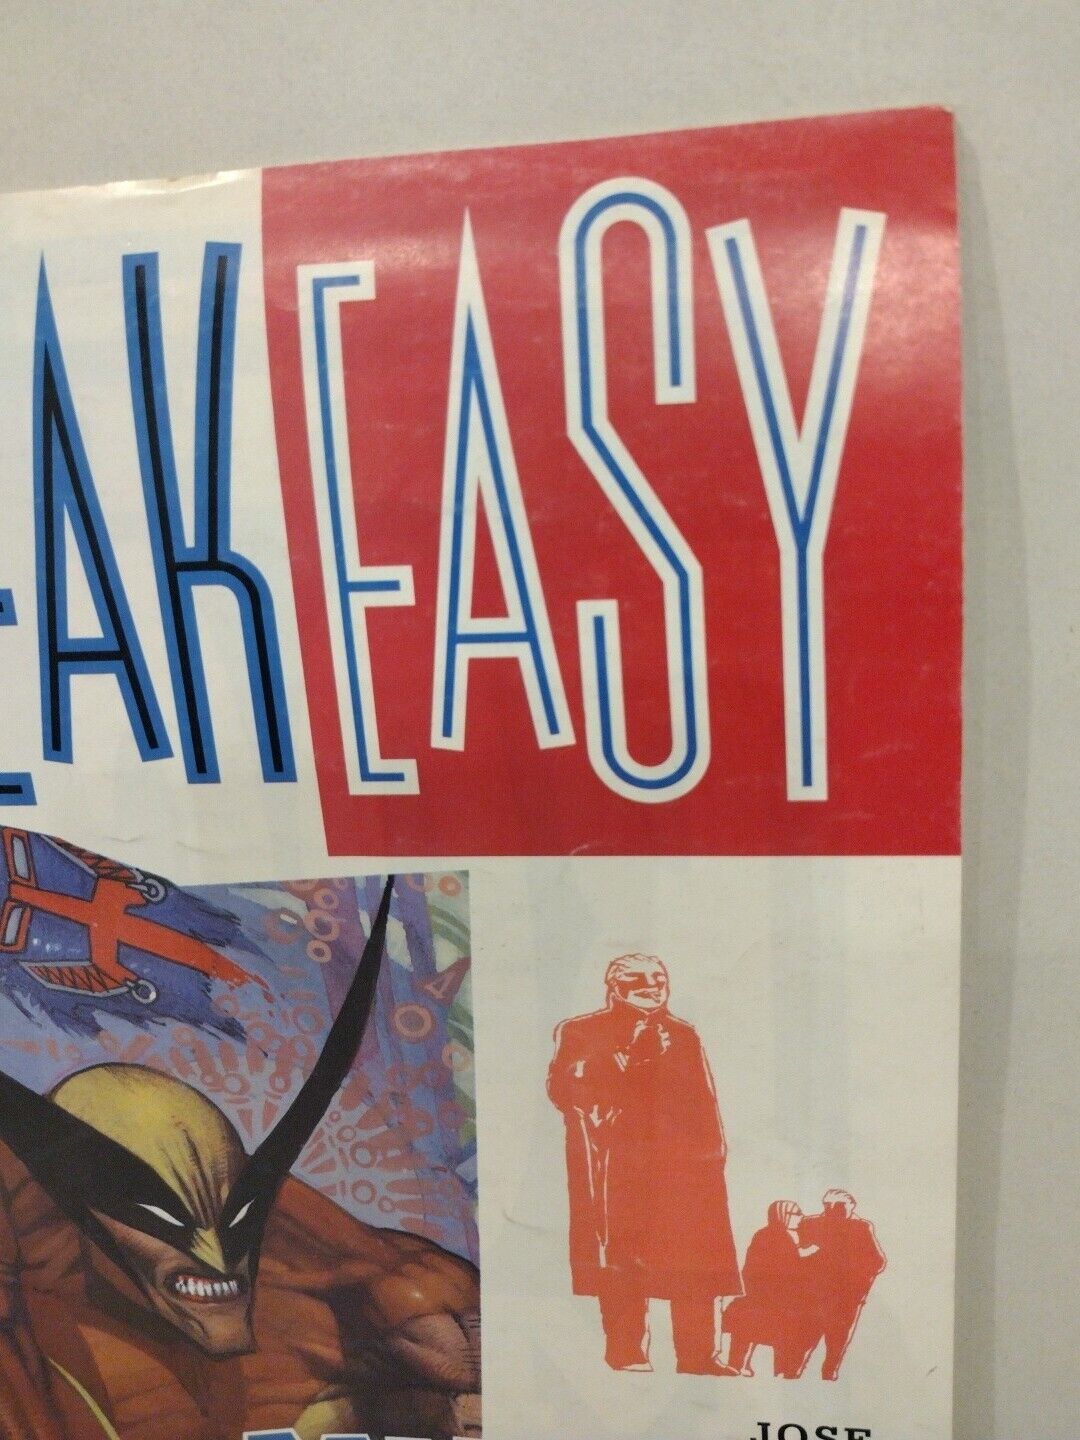 Speakeasy 106 (1990) UK Comic Magazine Wolverine Cover Bryan Talbot Claremont